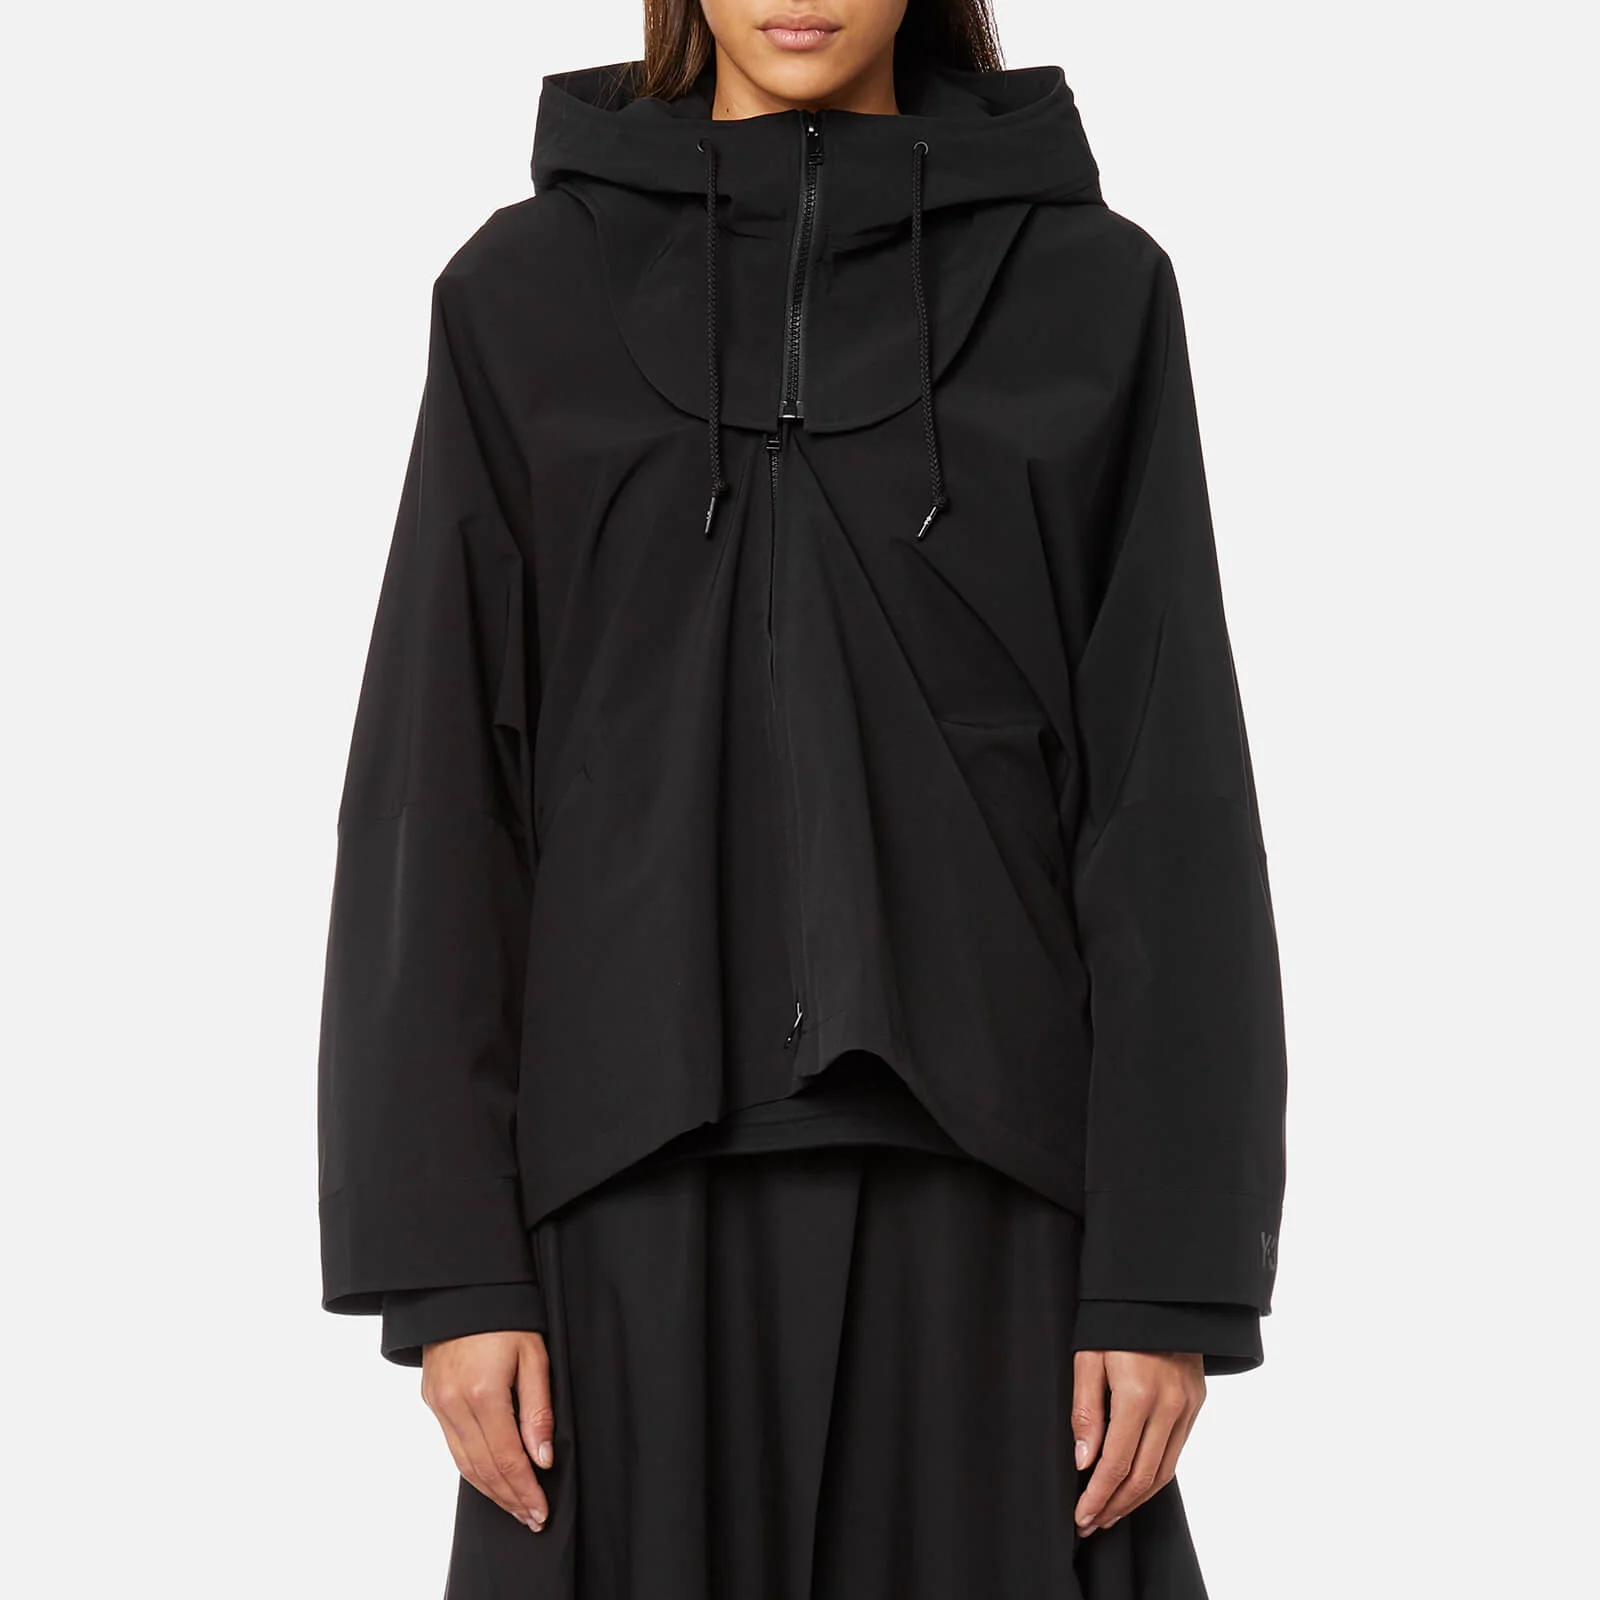 Y-3 Women's 2 Layer Hooded Jacket - Black Image 1